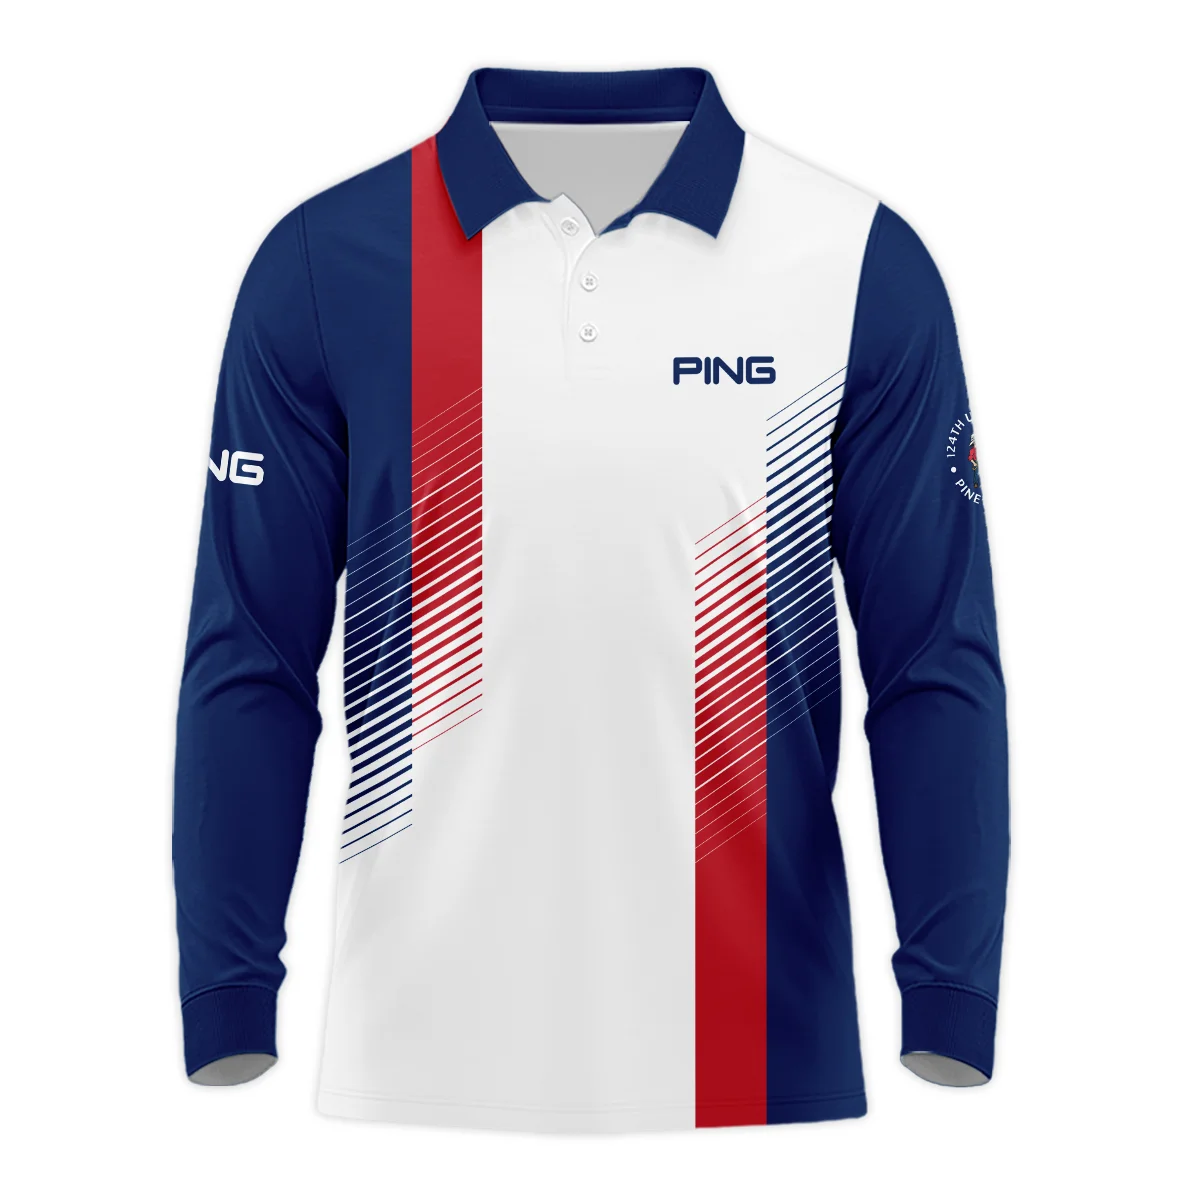 Sport Ping 124th U.S. Open Pinehurst Golf Unisex Sweatshirt Blue Red Striped Pattern White All Over Print Sweatshirt